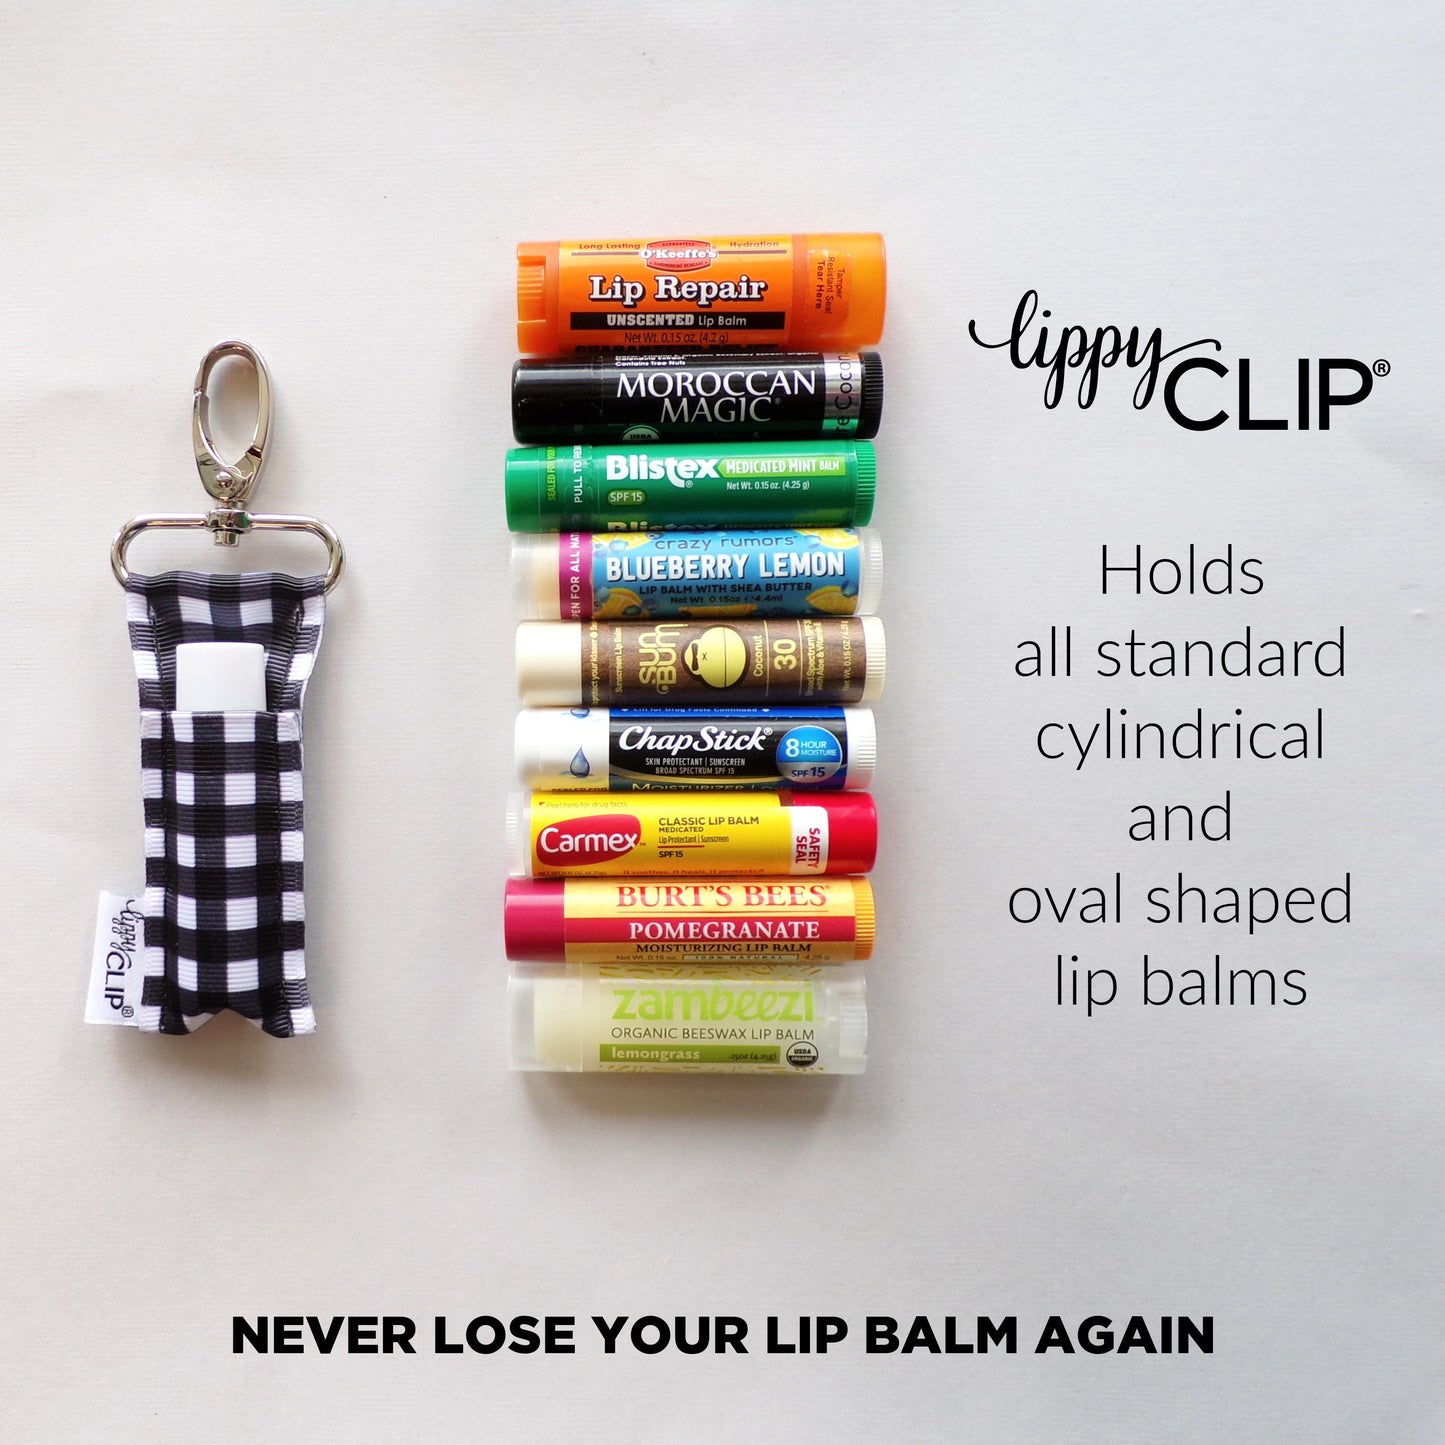 Pearly Whites LippyClip® Lip Balm Holder